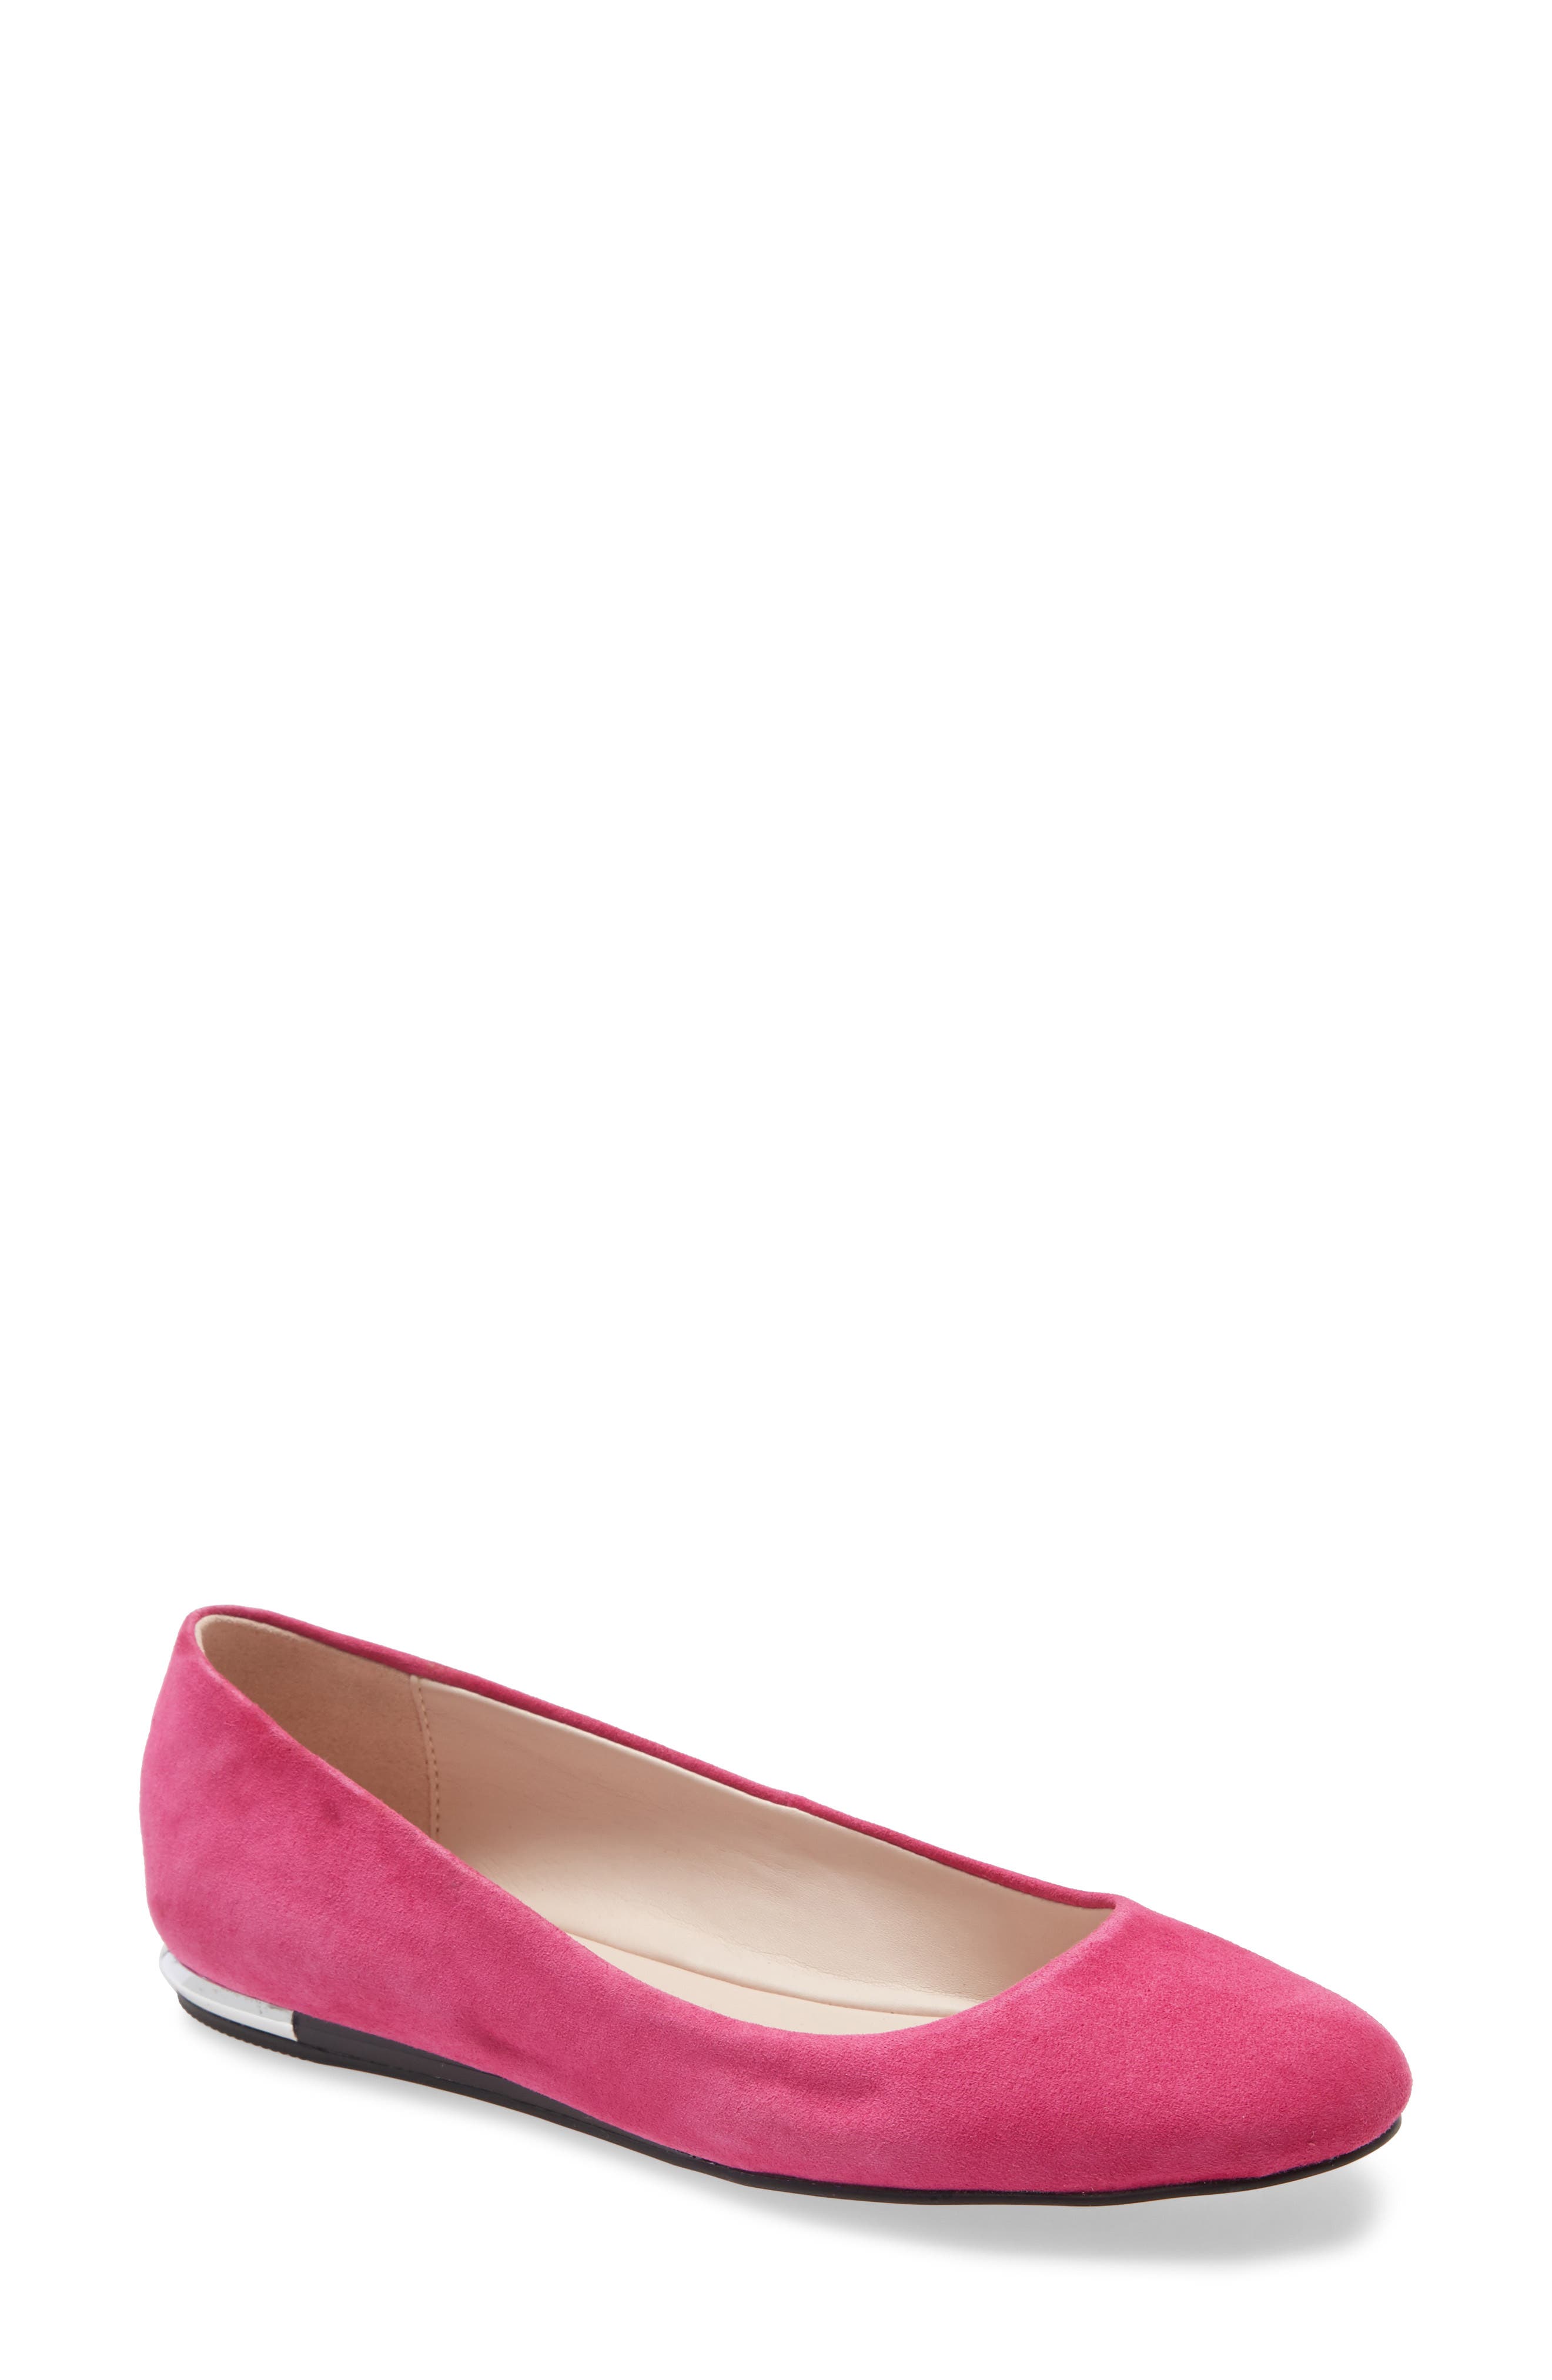 UPC 194060233741 product image for Women's Calvin Klein Kosi Skimmer Flat, Size 6.5 M - Pink | upcitemdb.com